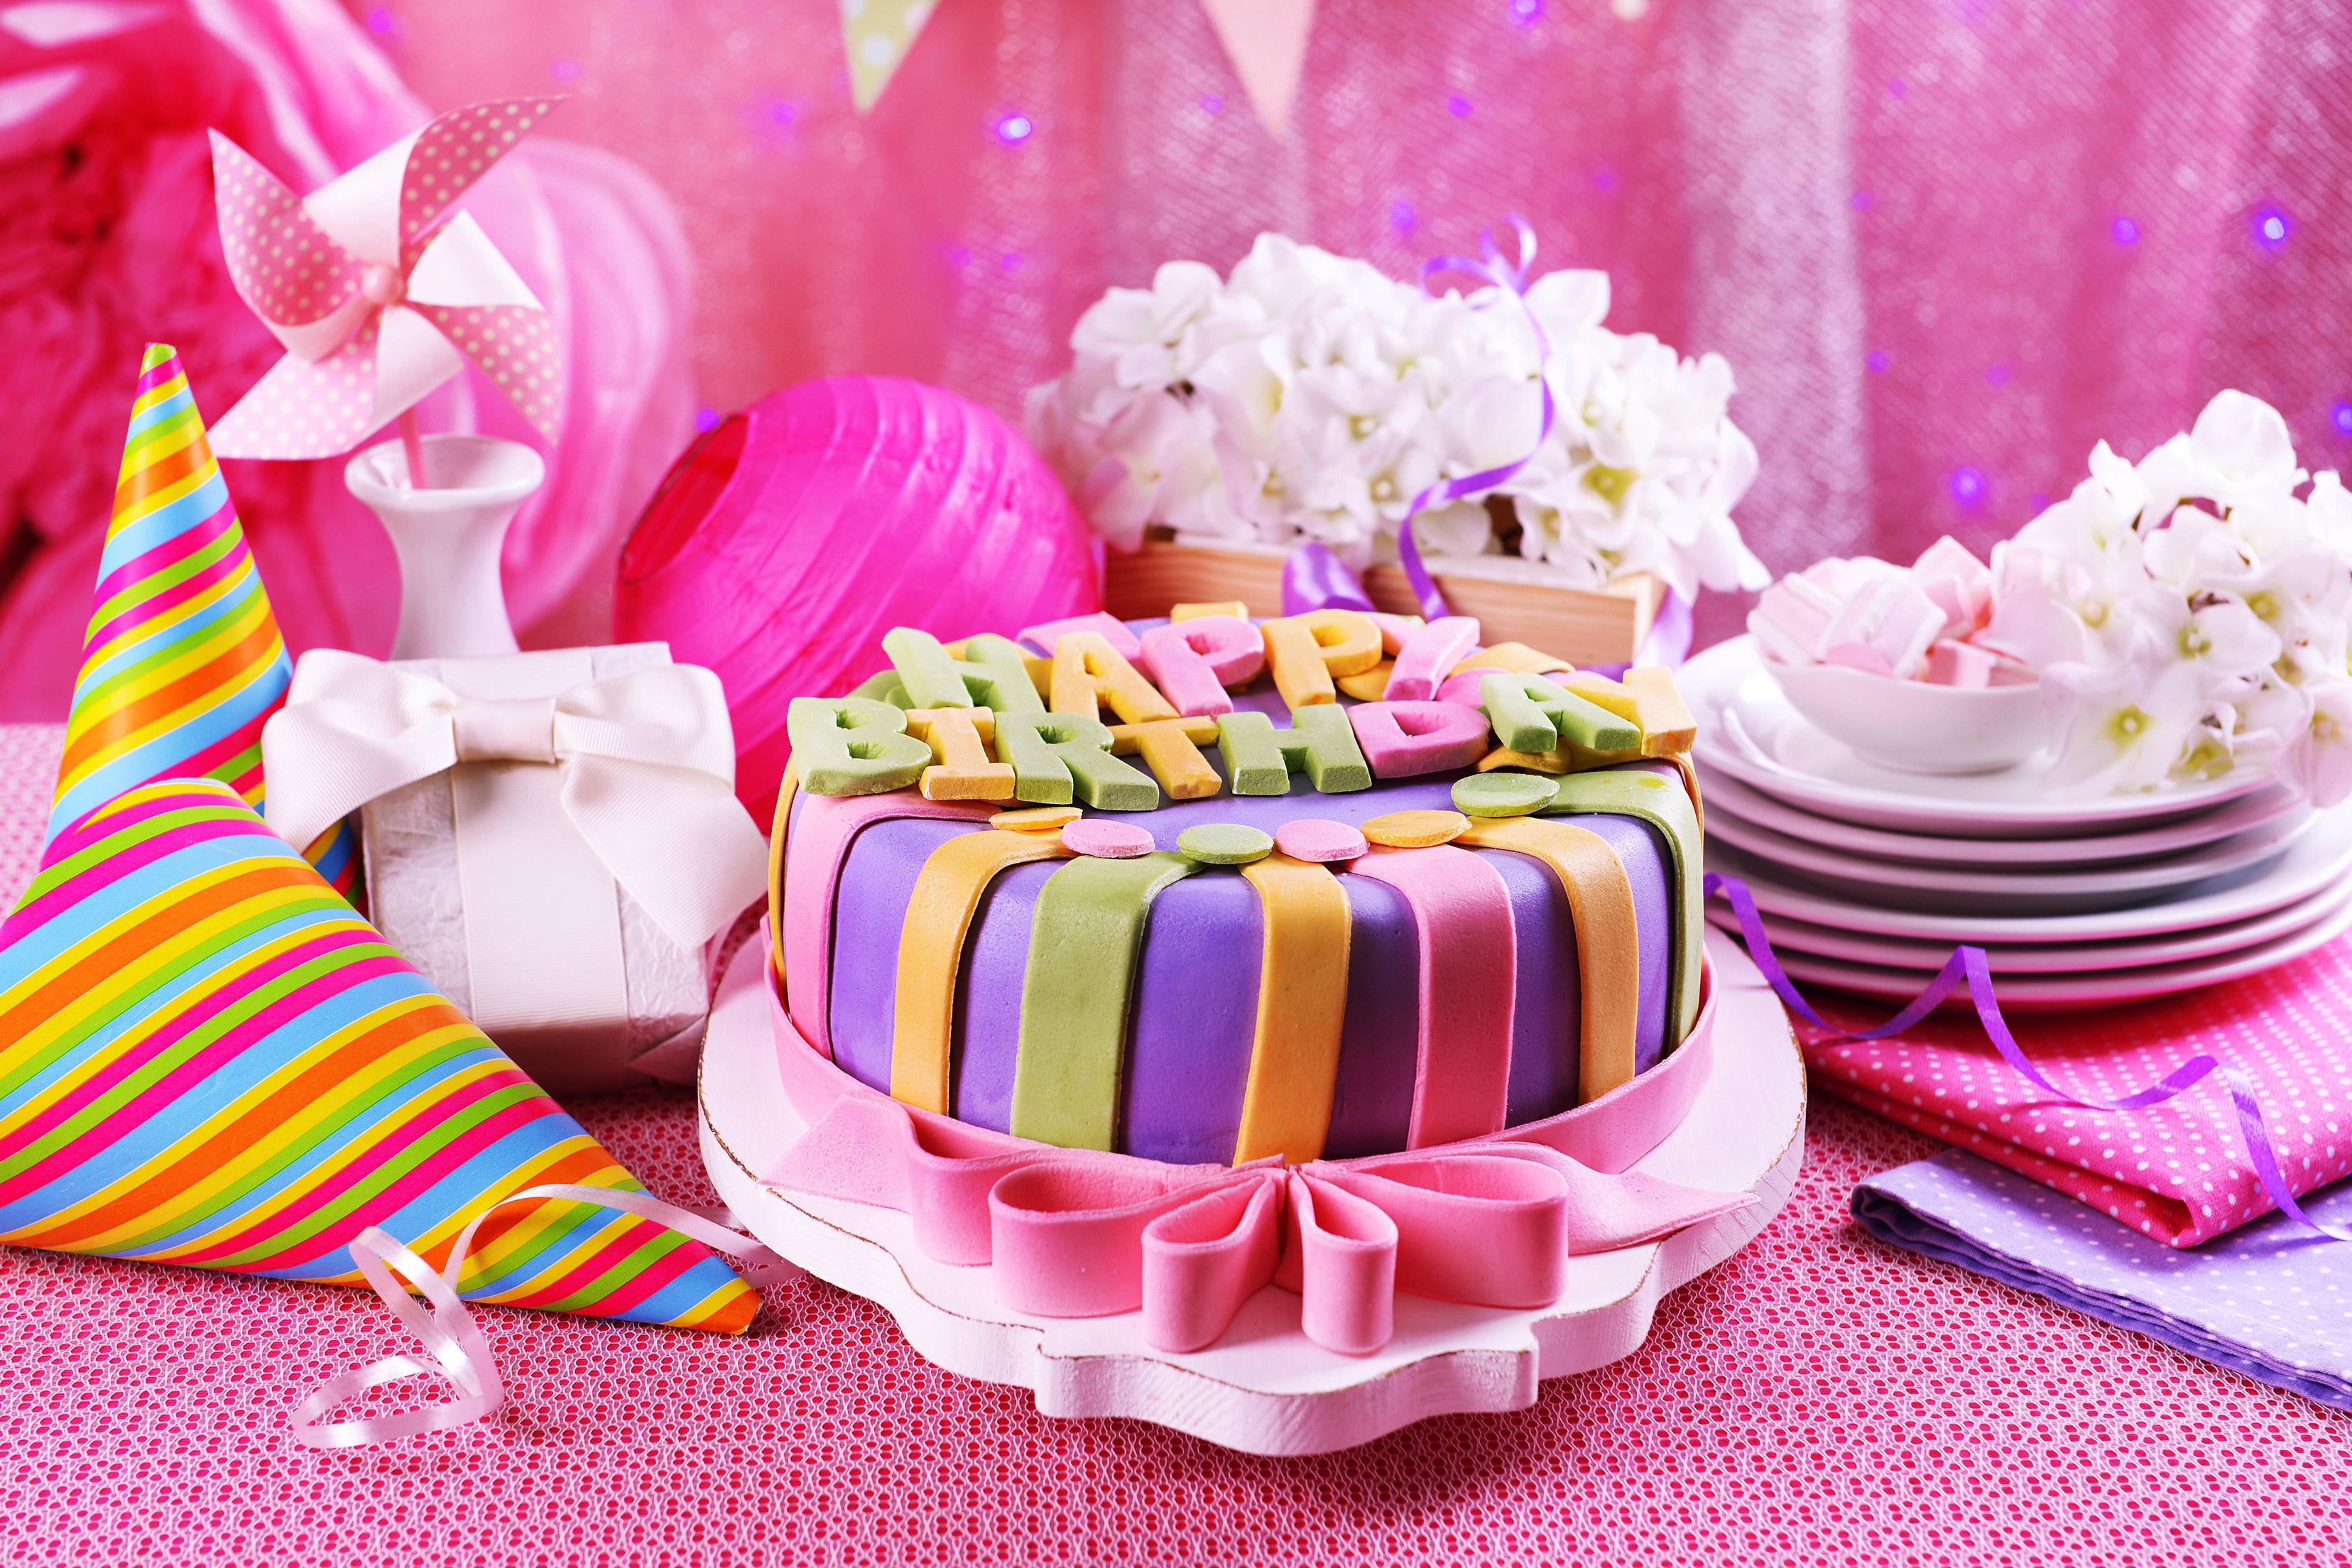 Pink Birthday Cake, HD Celebrations, 4k Wallpapers, Images, Backgrounds ... - Pink BirthDay Cake HD